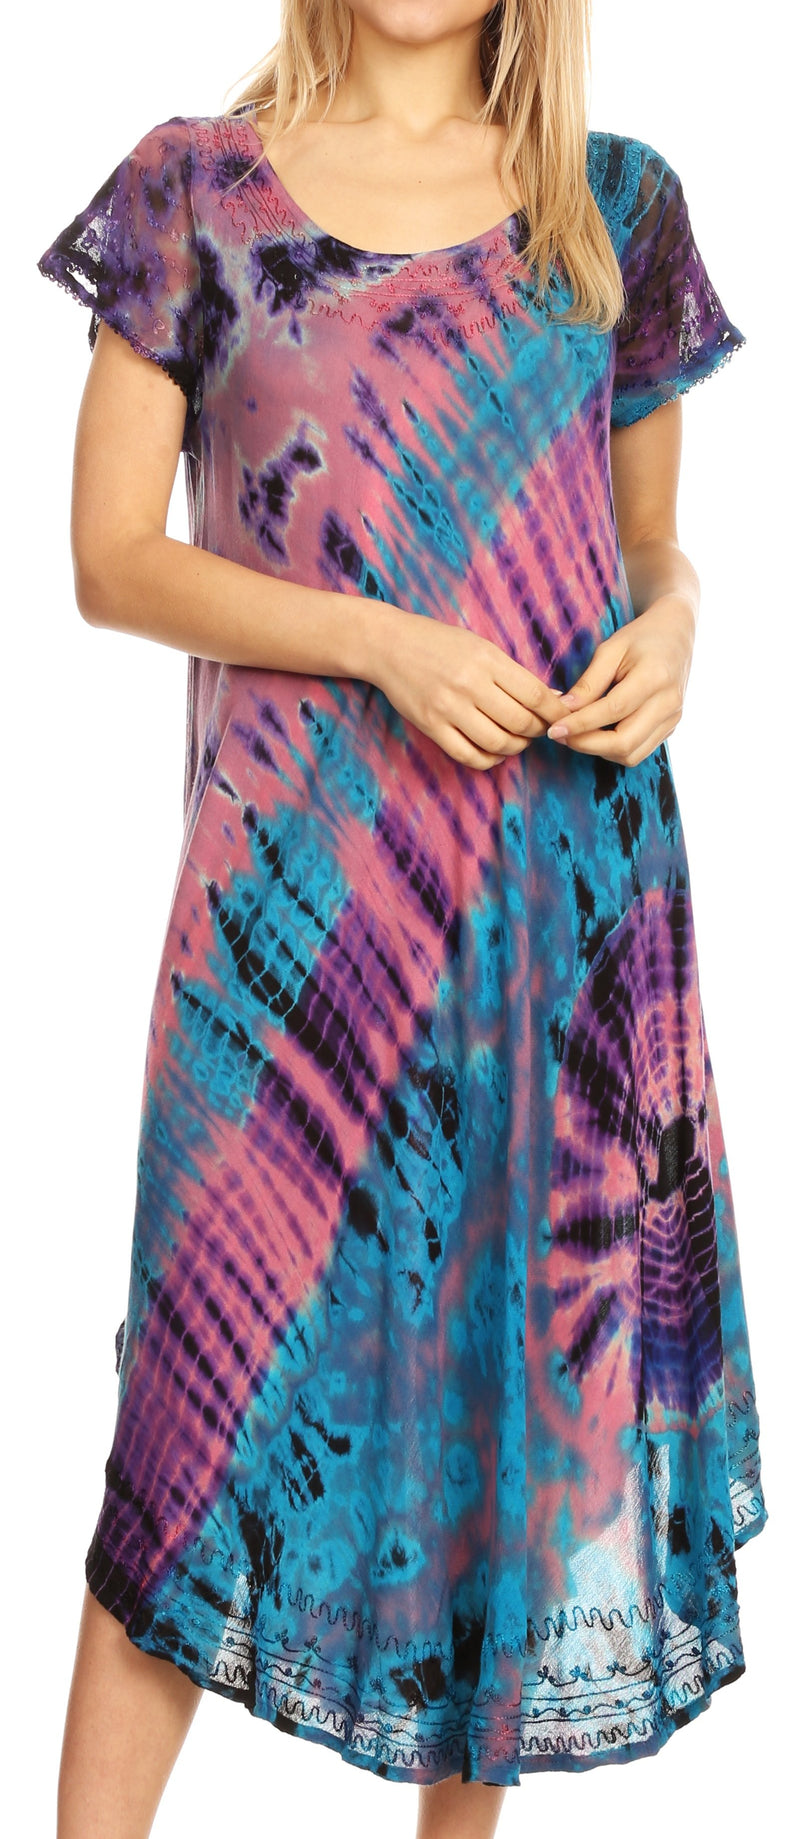 Sakkas Sofi Women's Short Sleeve Embroidered Tie Dye Caftan Tank Dress / Cover Up